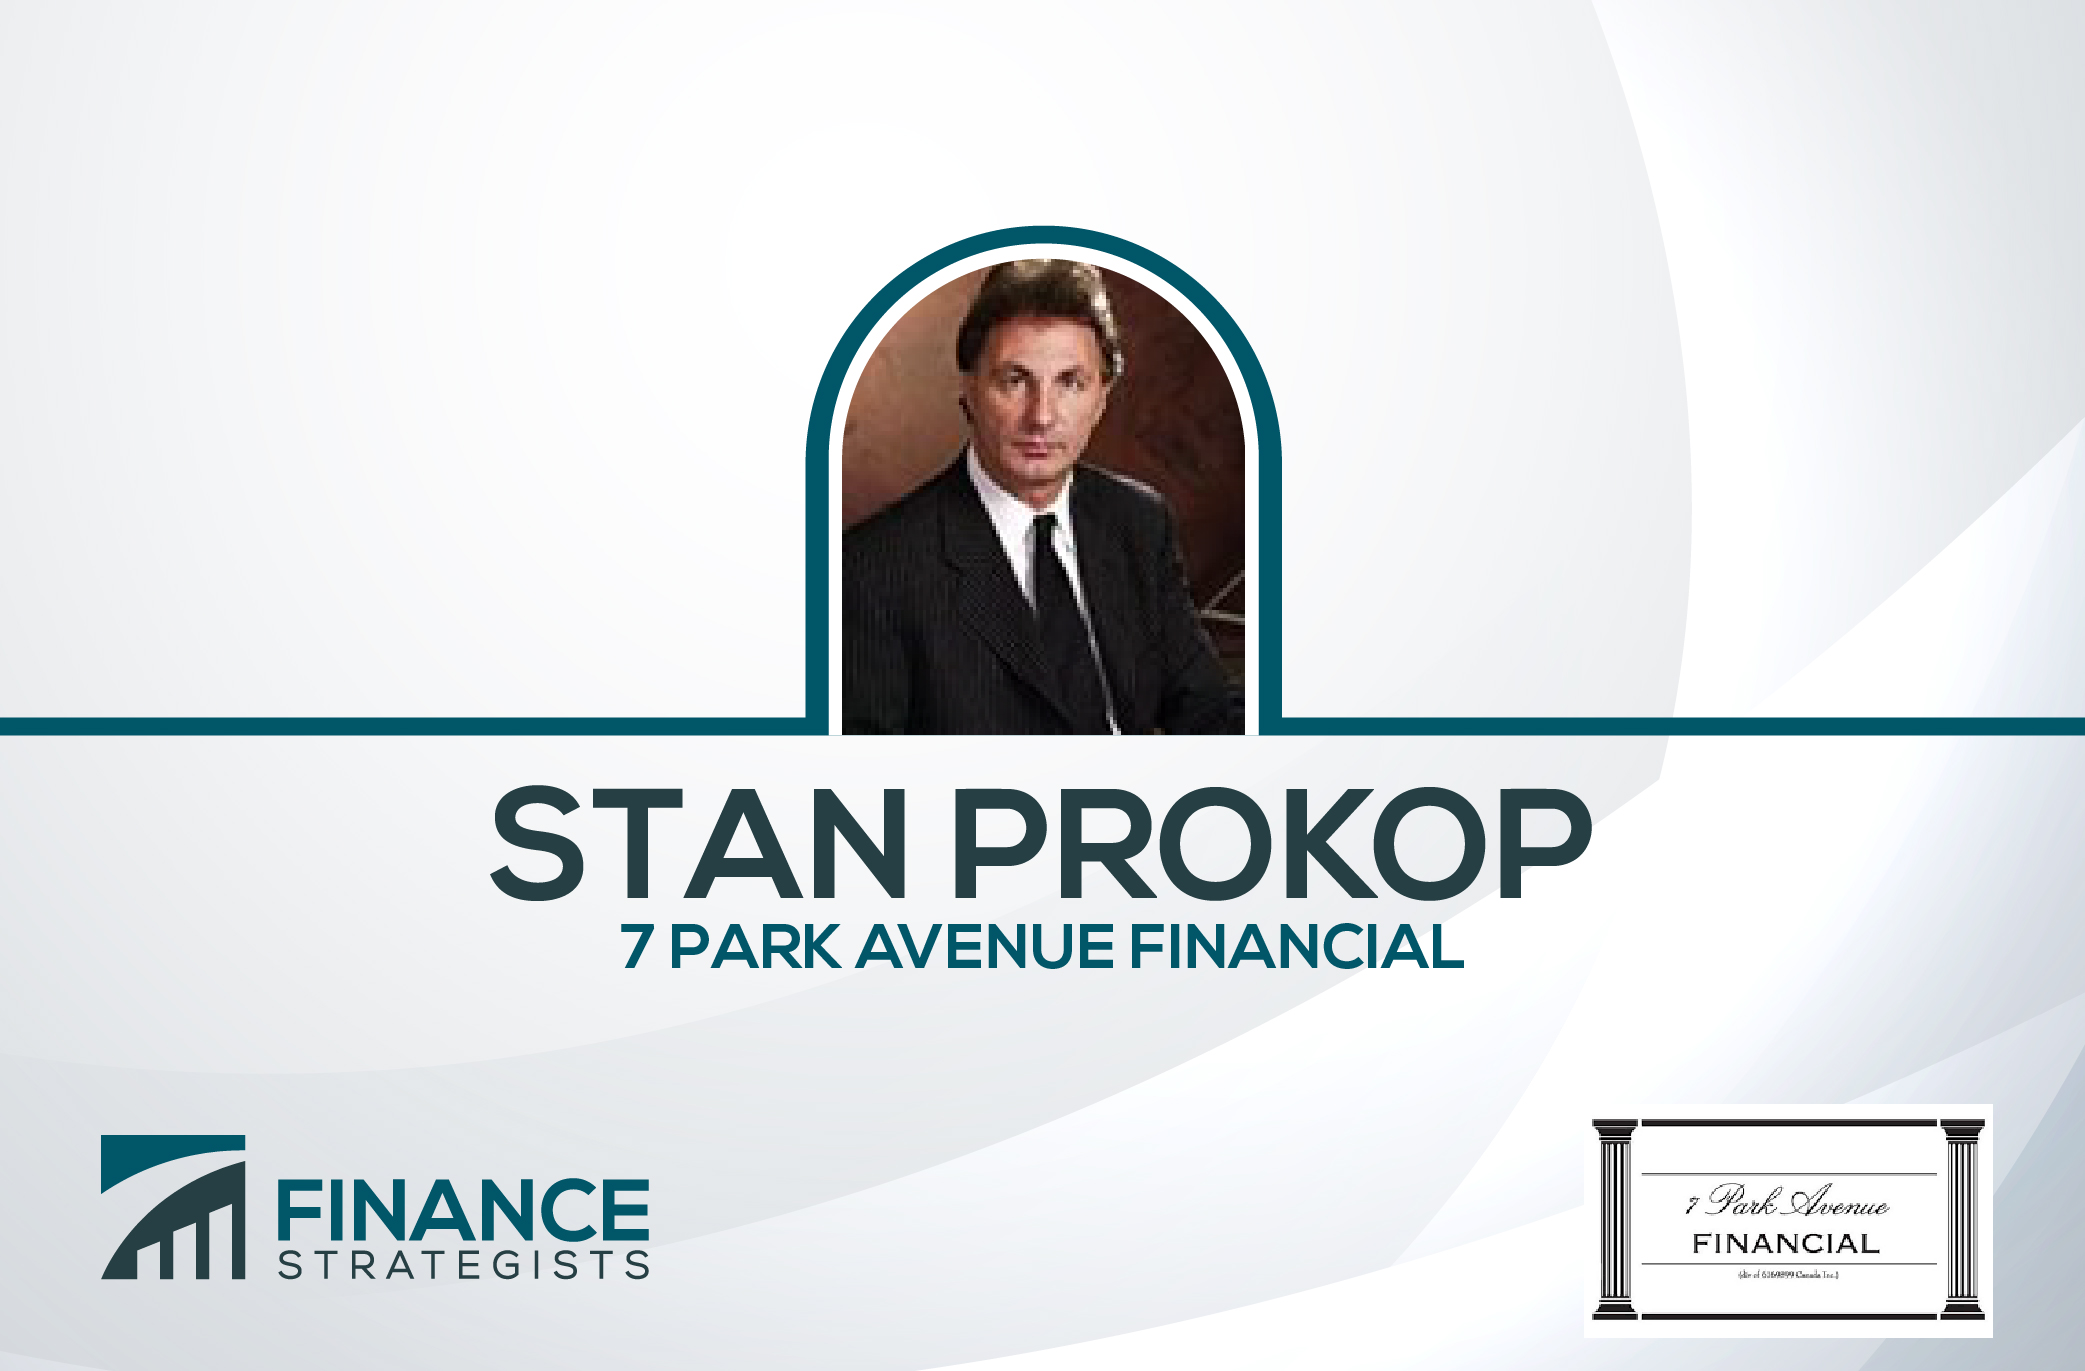 Stan Prokop | Founder of 7 Park Avenue Financial